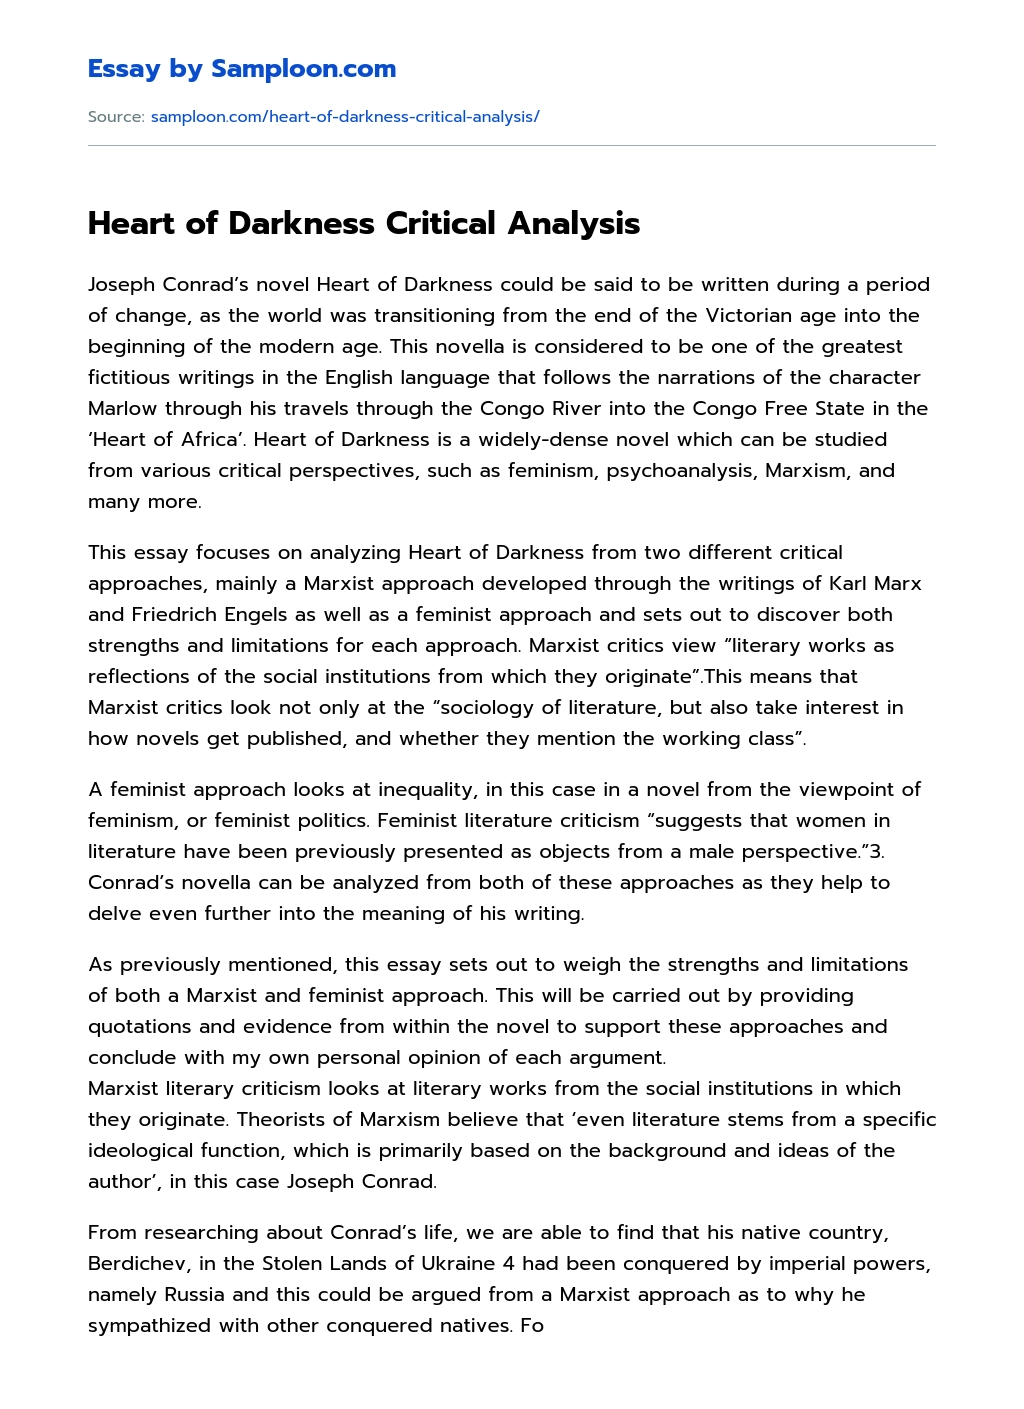 Heart of Darkness Critical Analysis essay